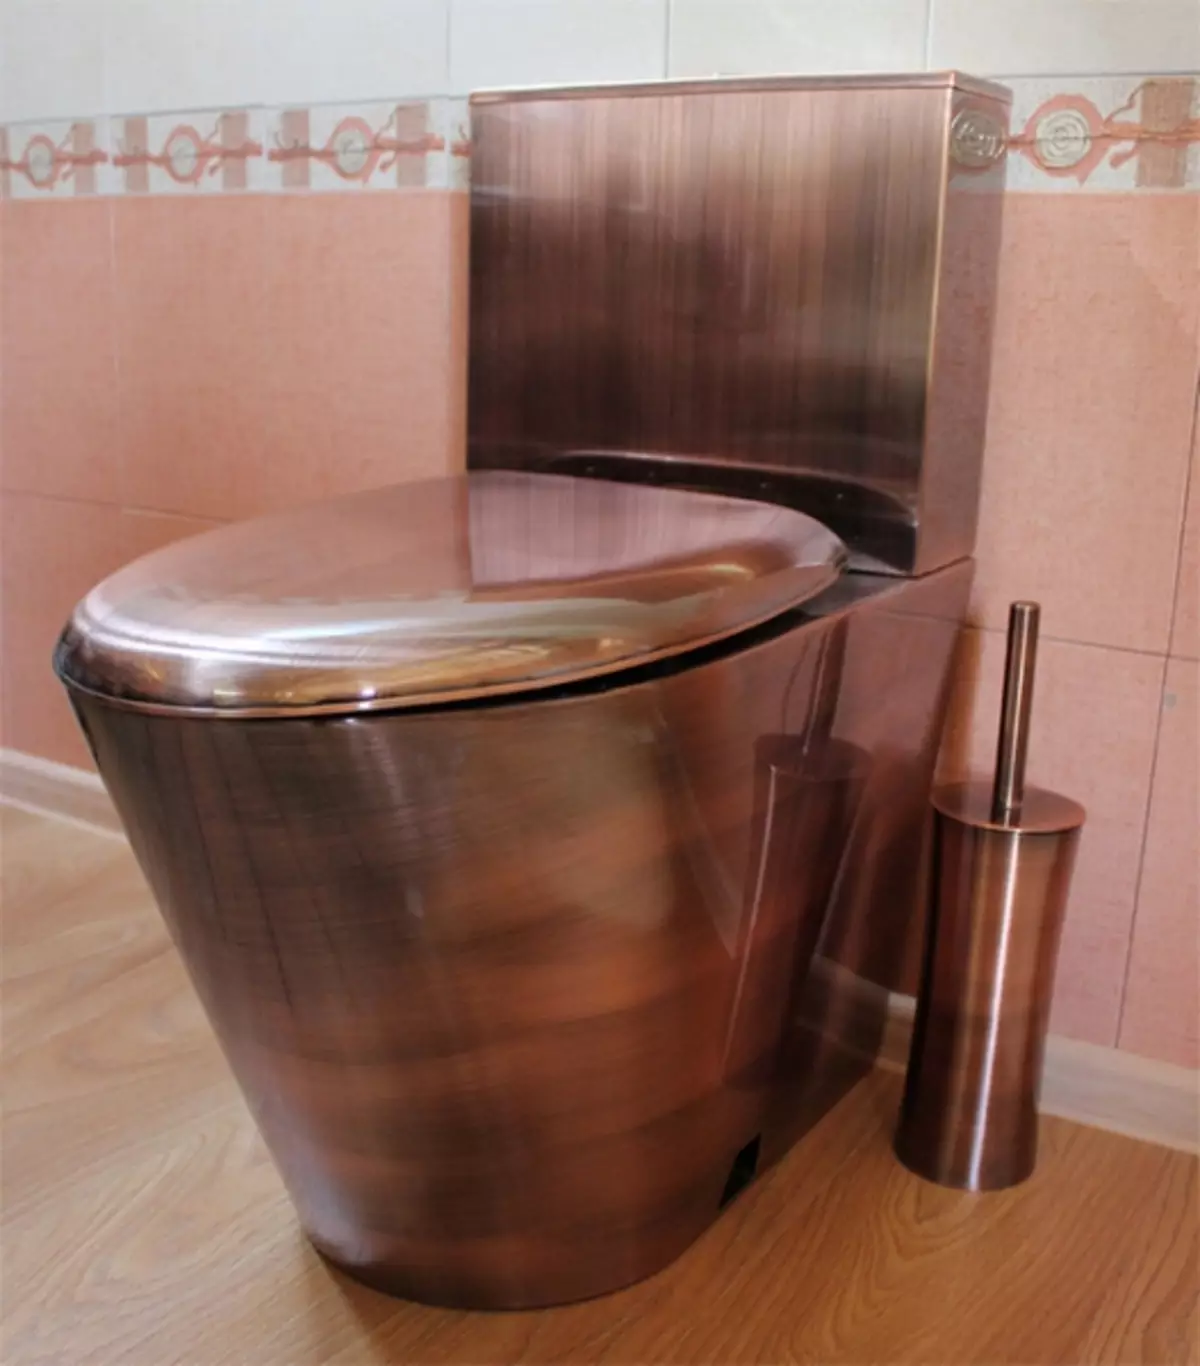 Toilet Stainless Steel